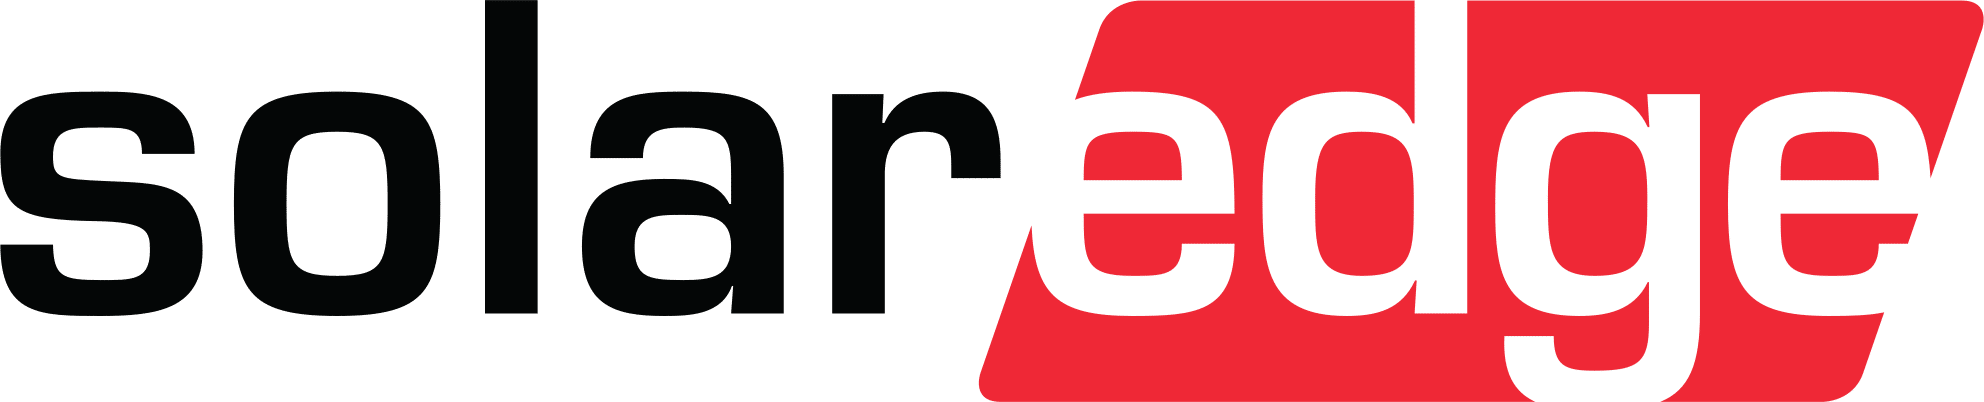 Solar Edge- logo